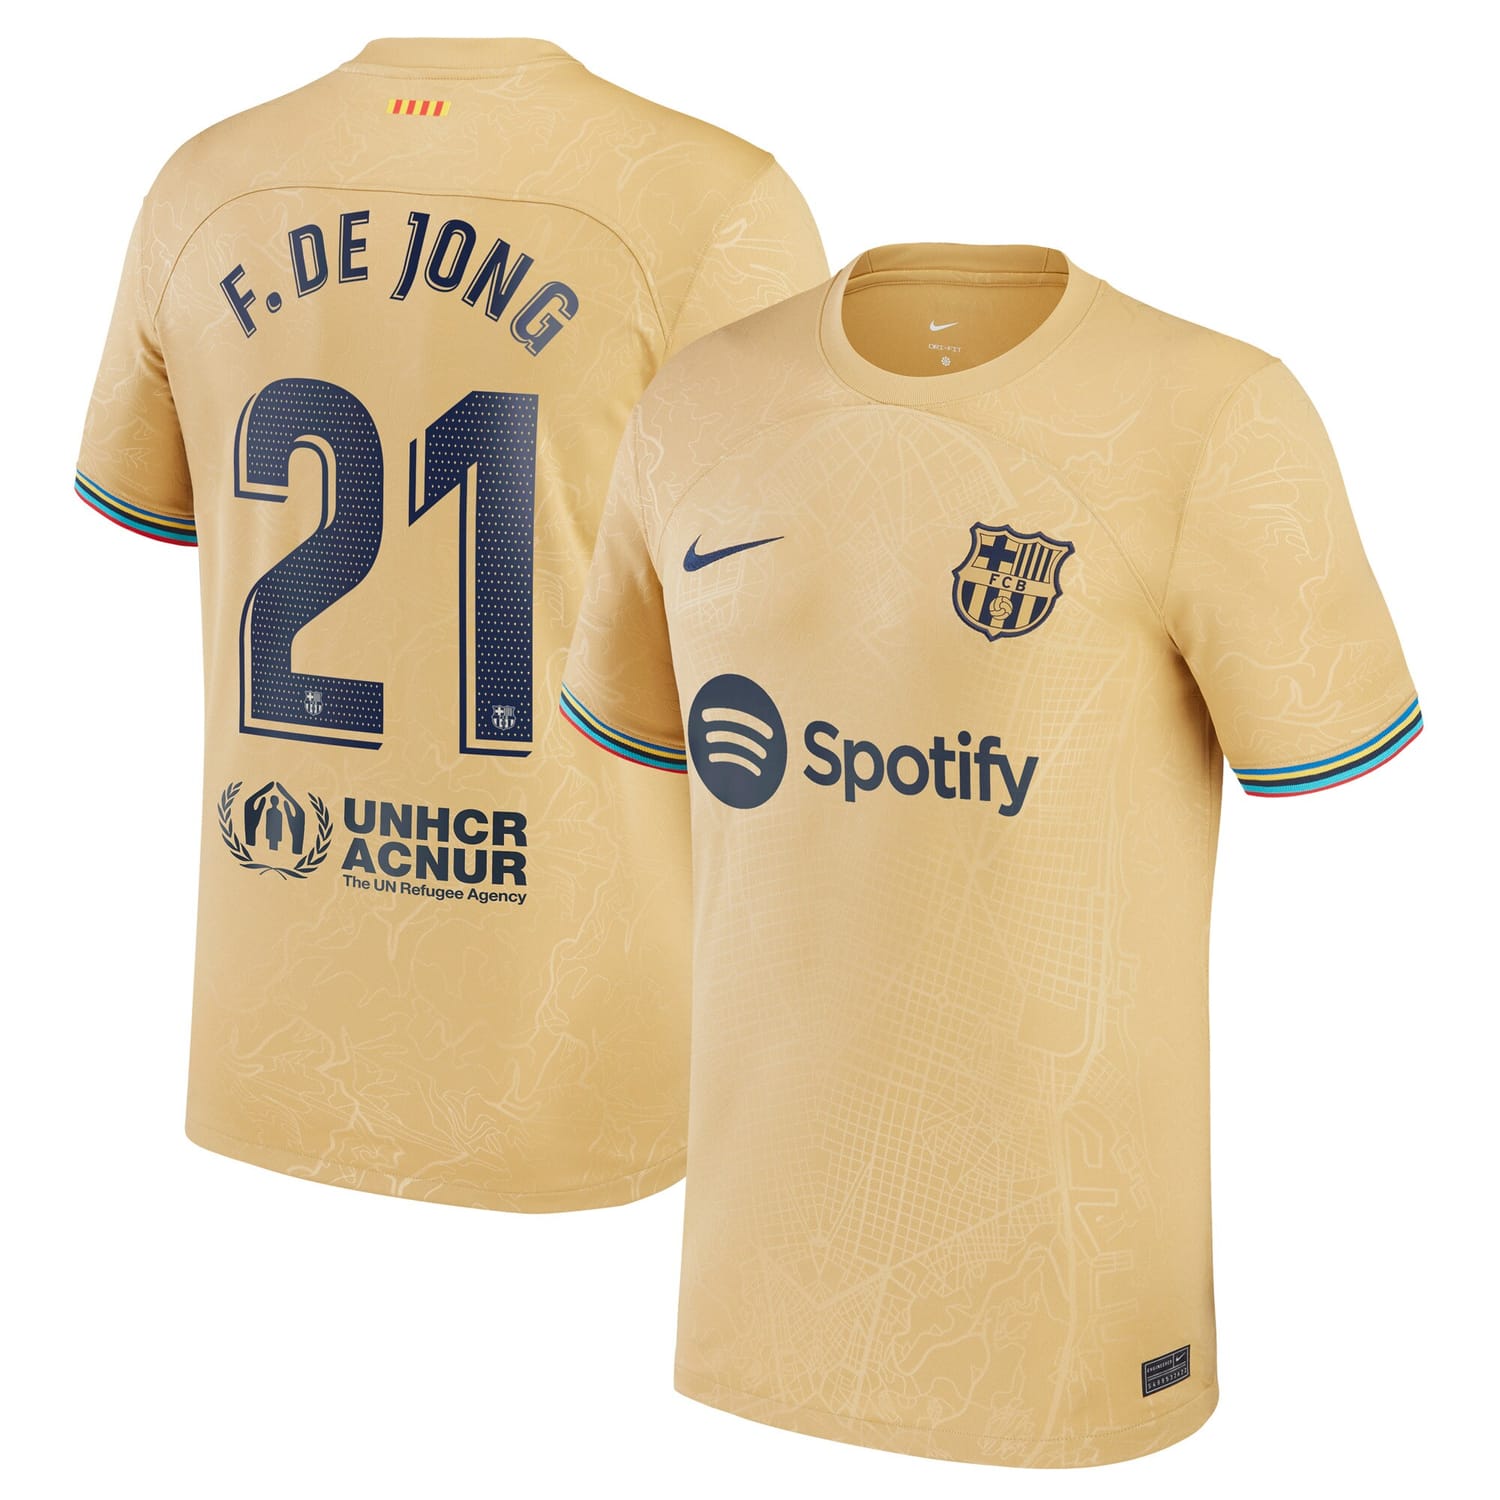 La Liga Barcelona Away Jersey Shirt Yellow 2022-23 player Frenkie de Jong printing for Men